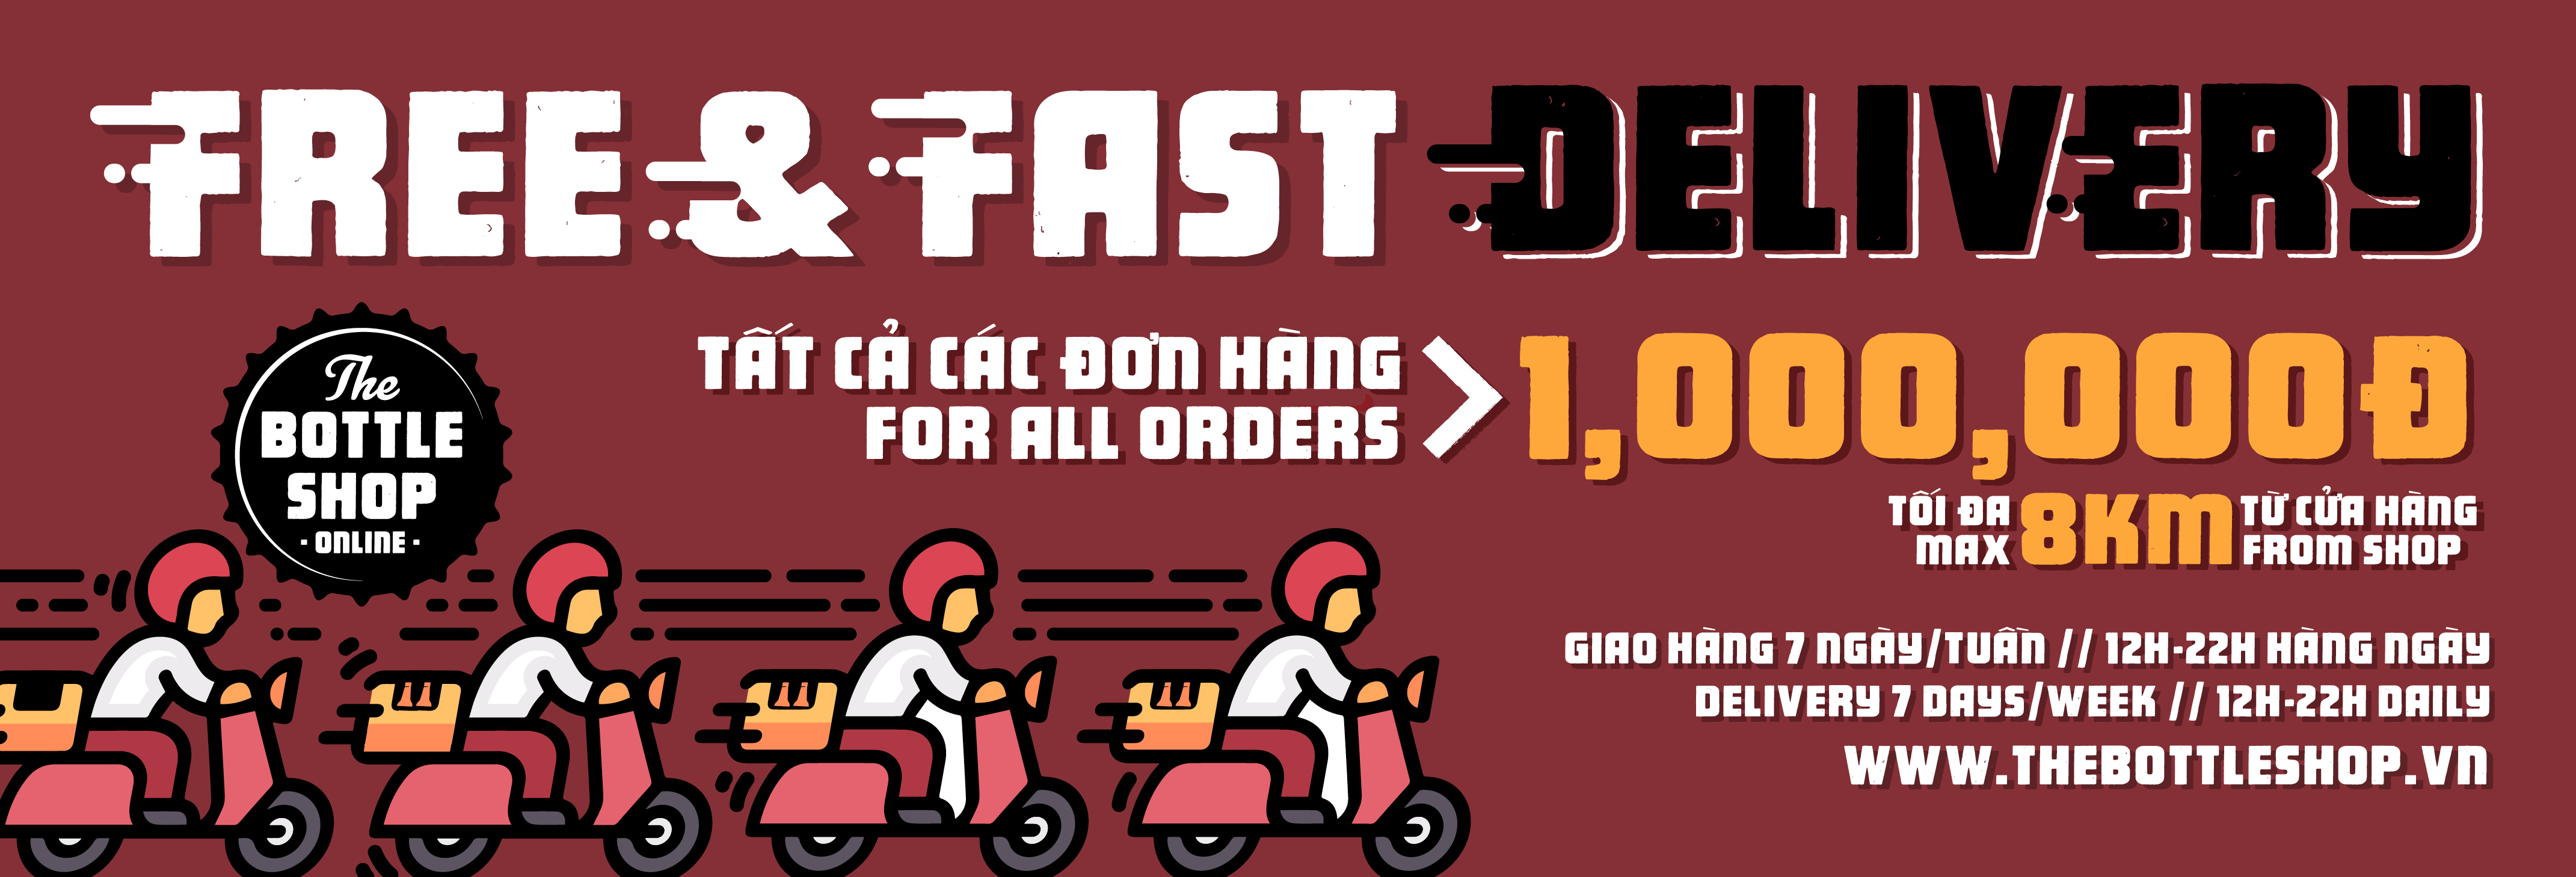 Free Fast Shipping Desktop Banner